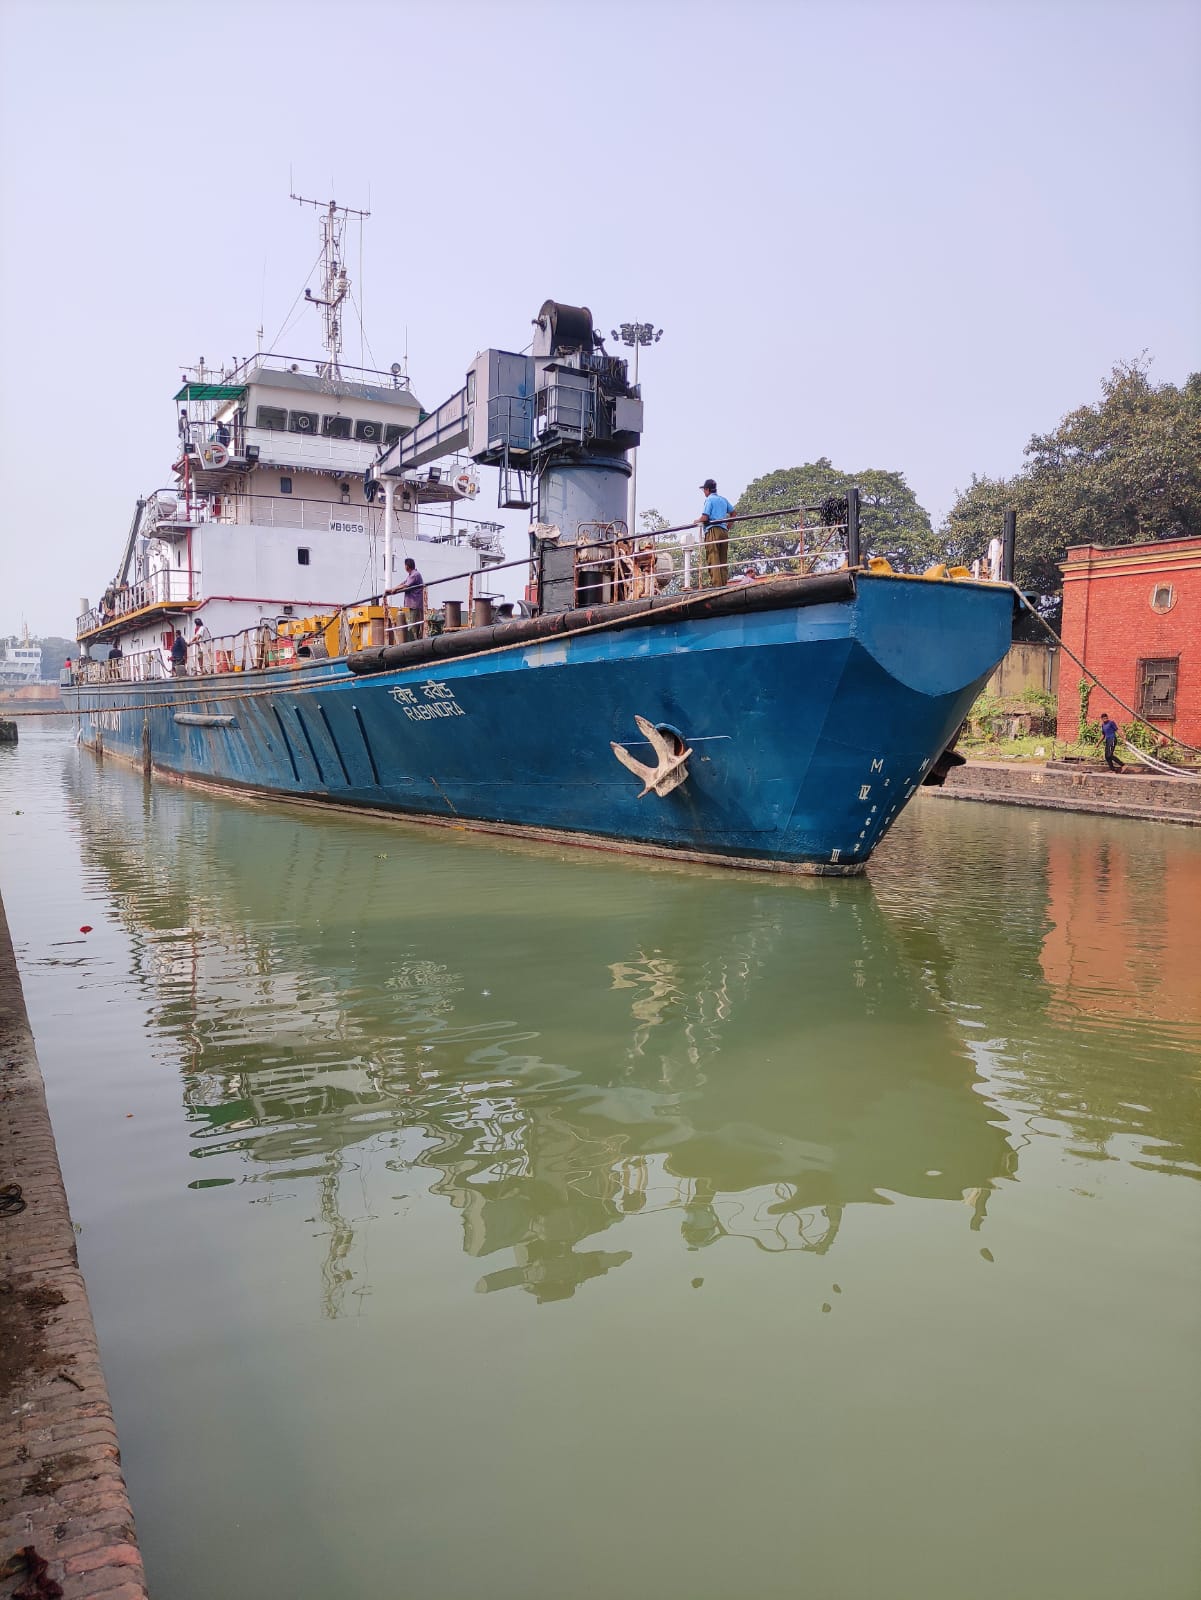 SMPK Vessel DV Rabindra Un-docked from GRSE-KPDD 2 post emergency repairs 22 Dec 22